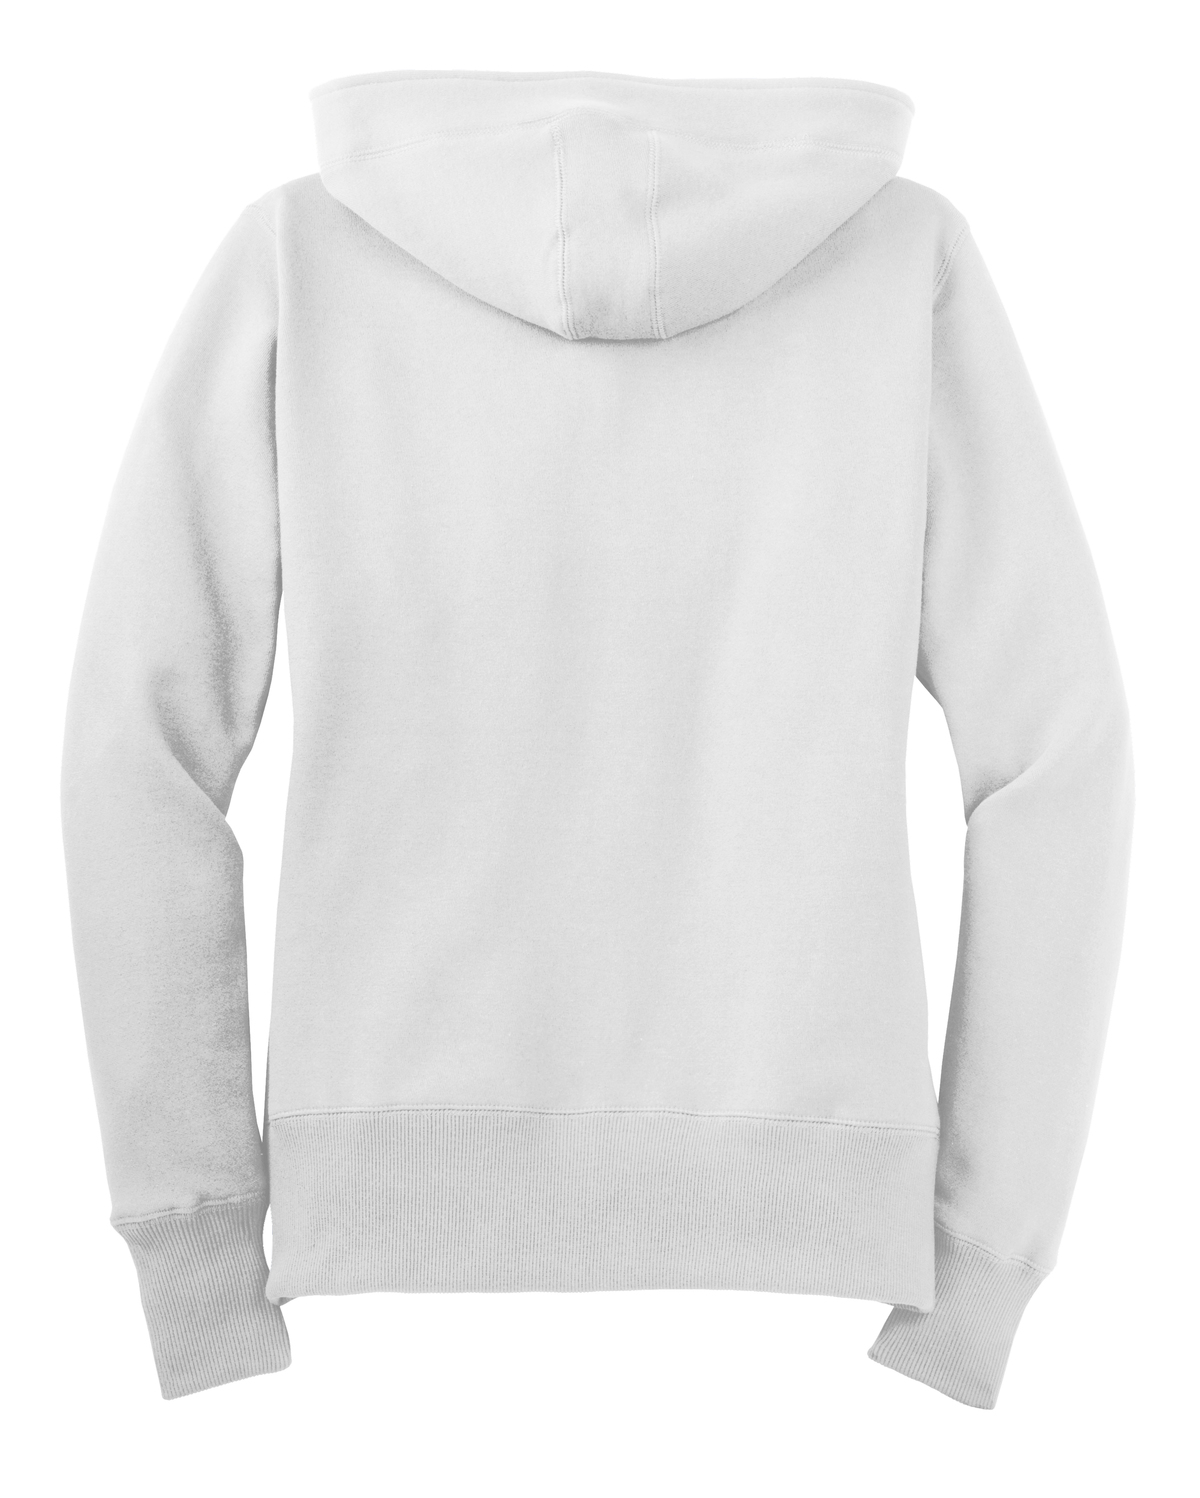 Sport-Tek Ladies Full-Zip Hooded Fleece Jacket | Product | SanMar